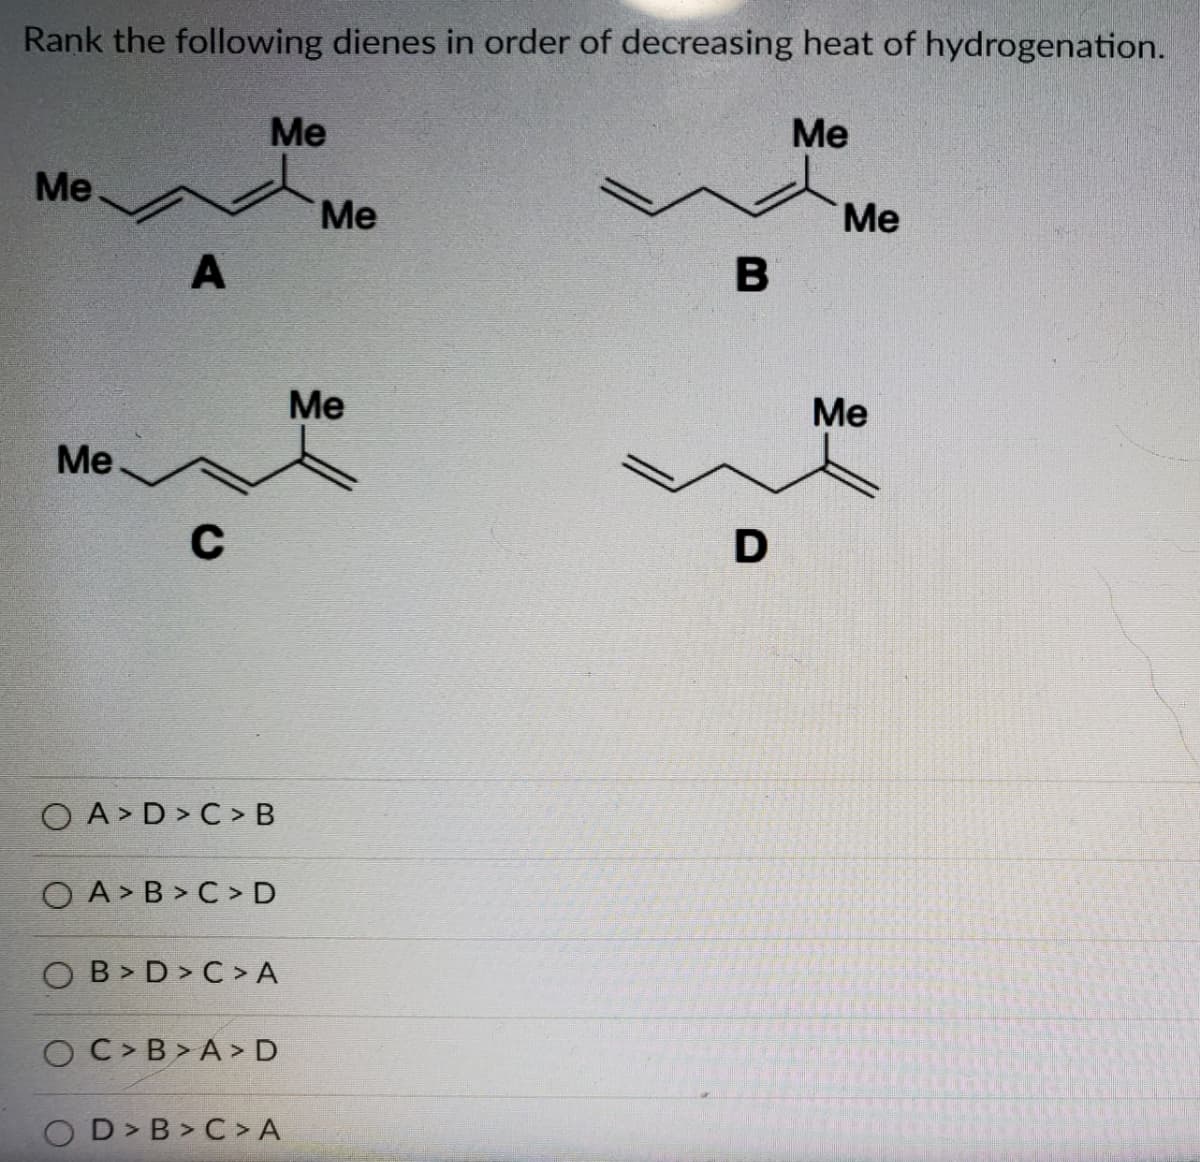 Rank the following dienes in order of decreasing heat of hydrogenation.
Me
Me
Me
Me
Me
A
B
Me
Ме
Me
C
D
O A > D > C > B
O A > B > C > D
O B > D > C > A
O C> B > A > D
OD>B > C > A
